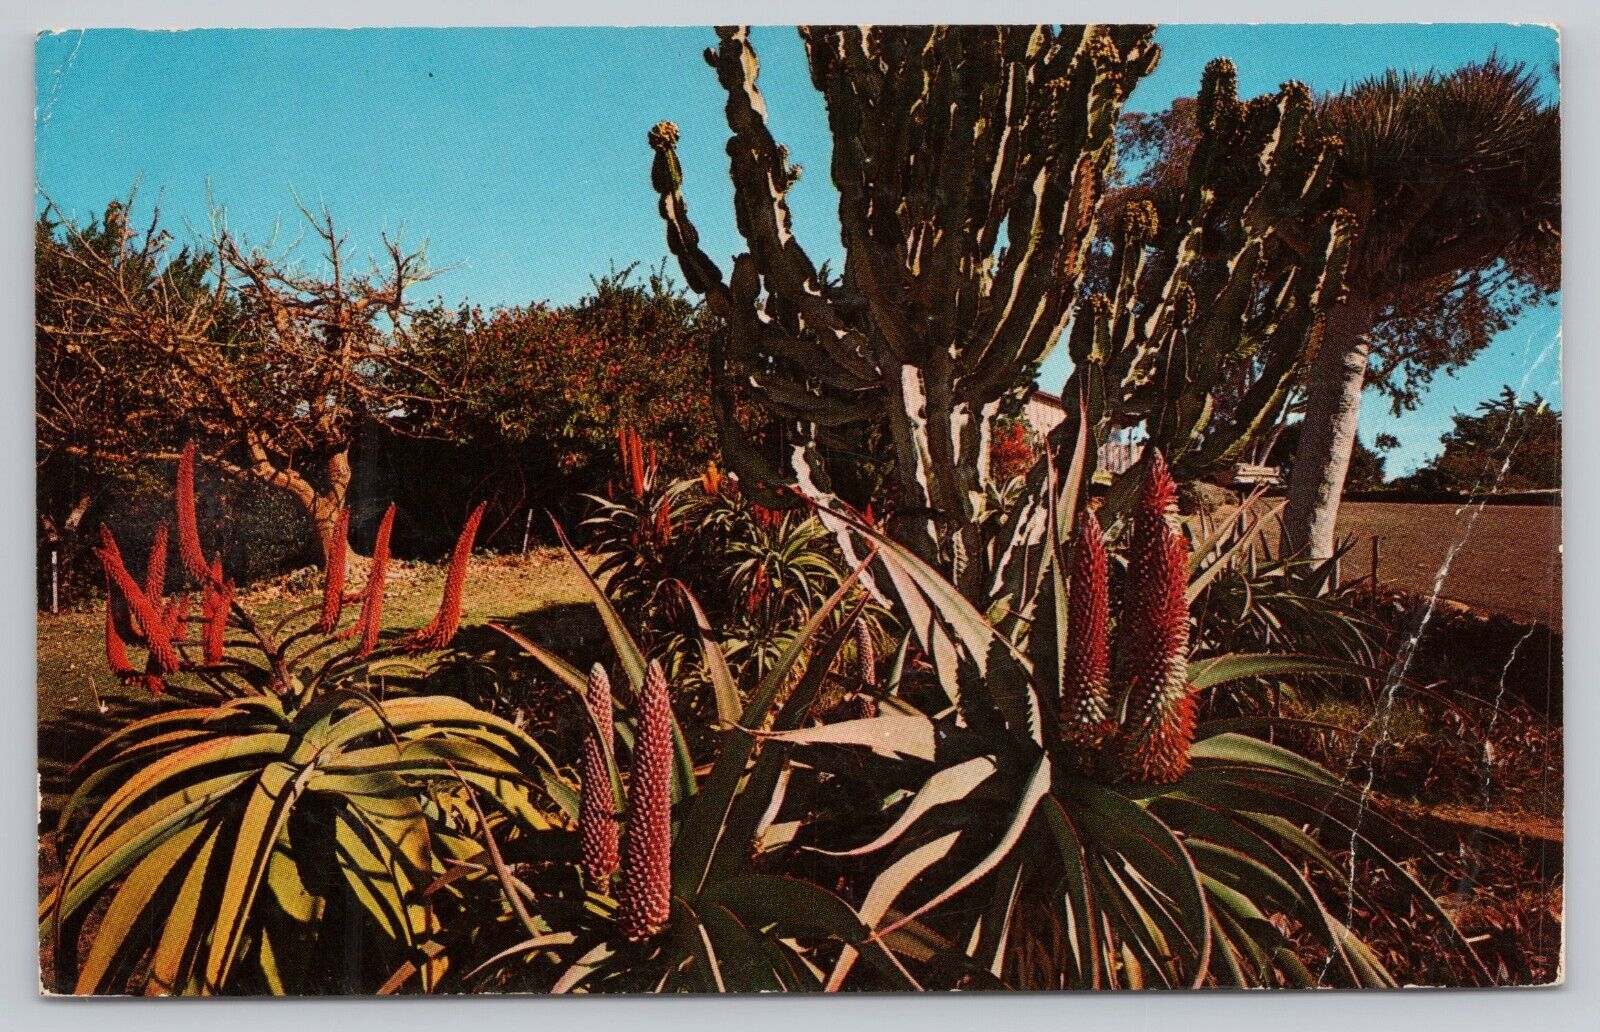 Encinitas California, Quail Park Botanic Gardens, San Diego County, VTG Postcard